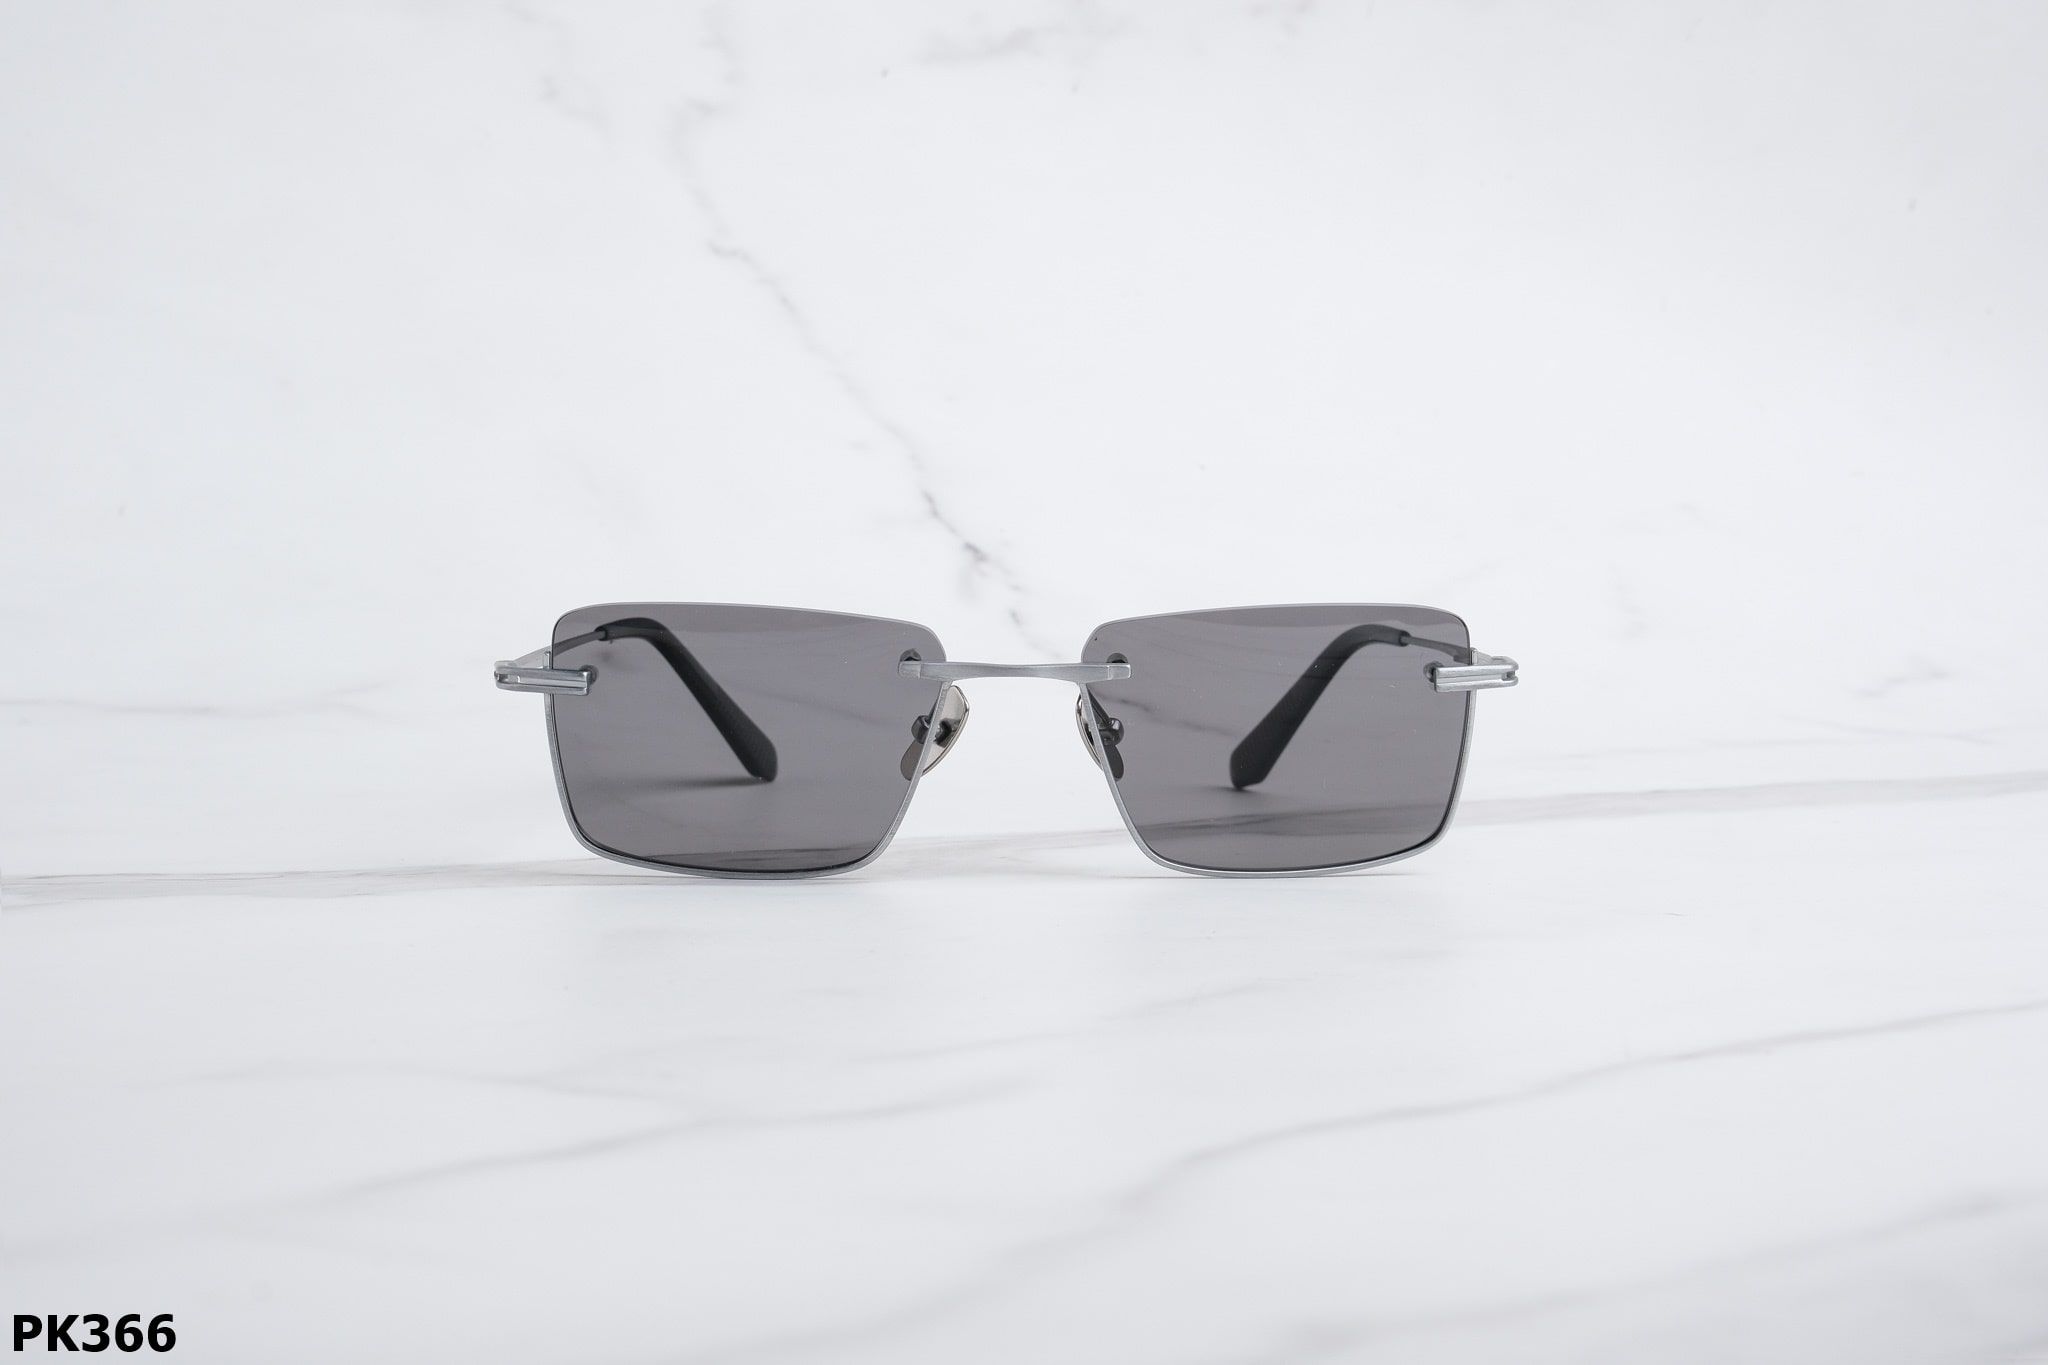  SHADY Eyewear - Sunglasses - PK366 